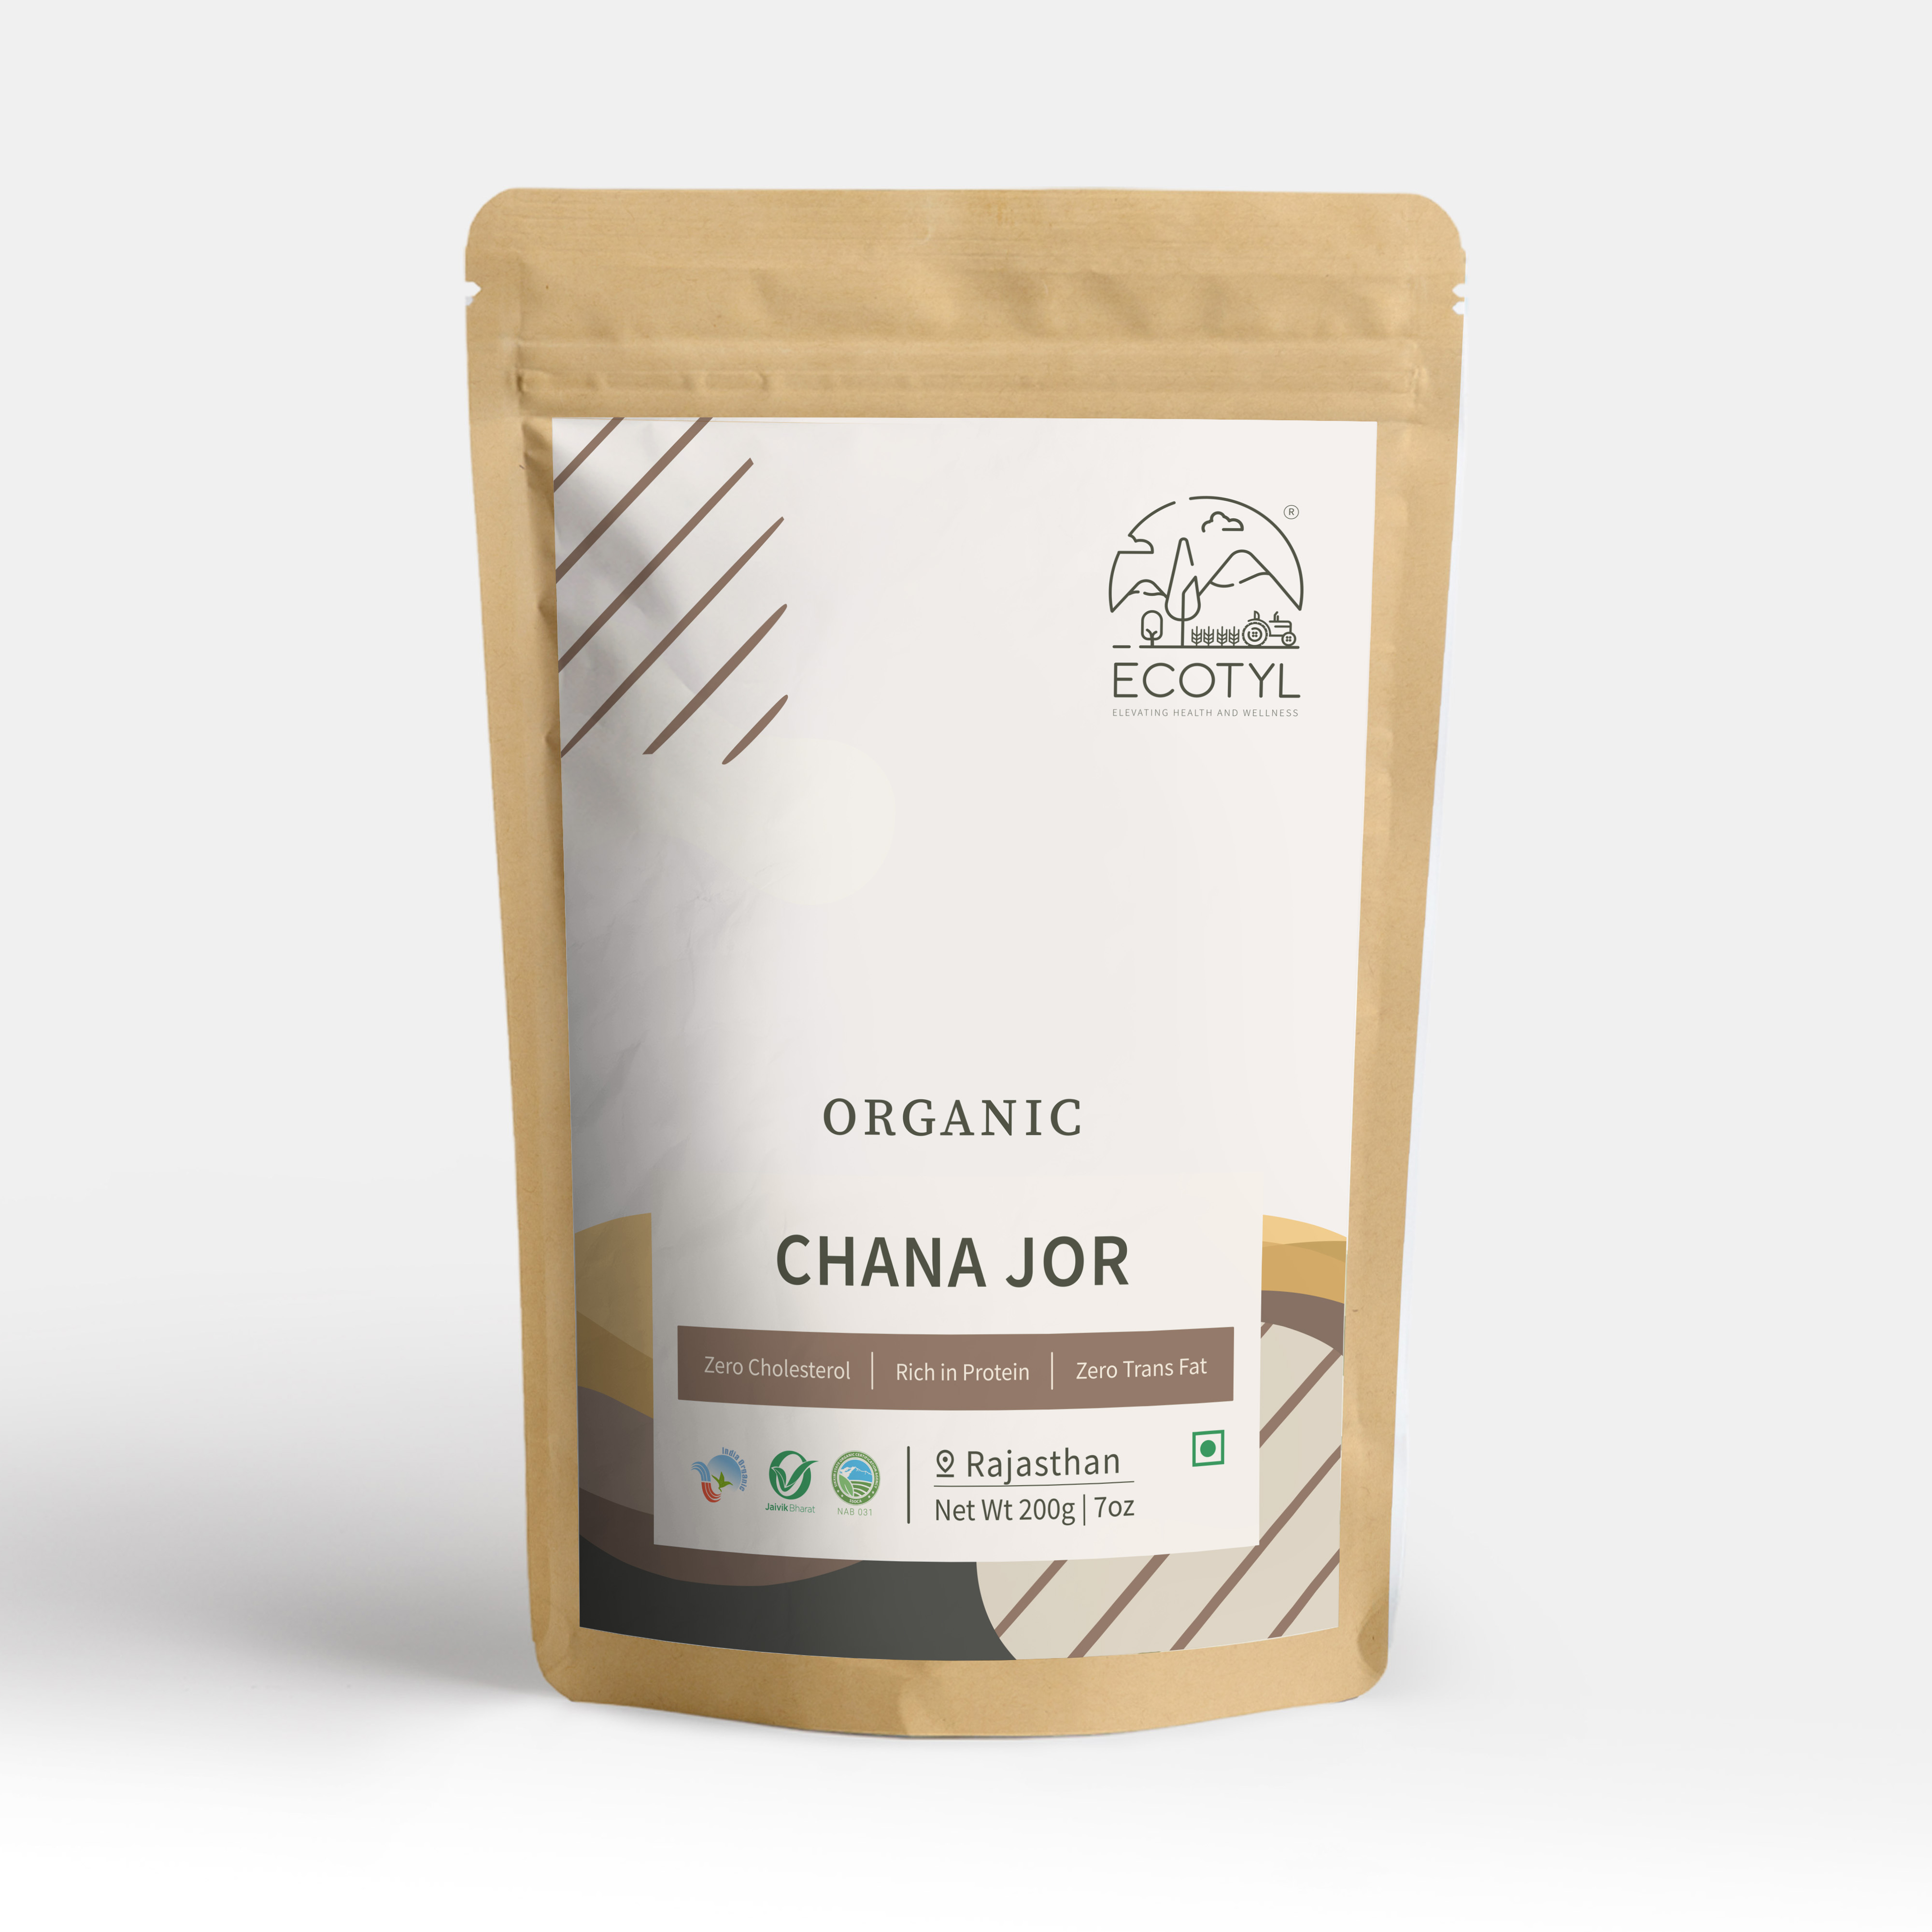 Buy Ecotyl Organic Chana Jor - 200 g at Best Price Online